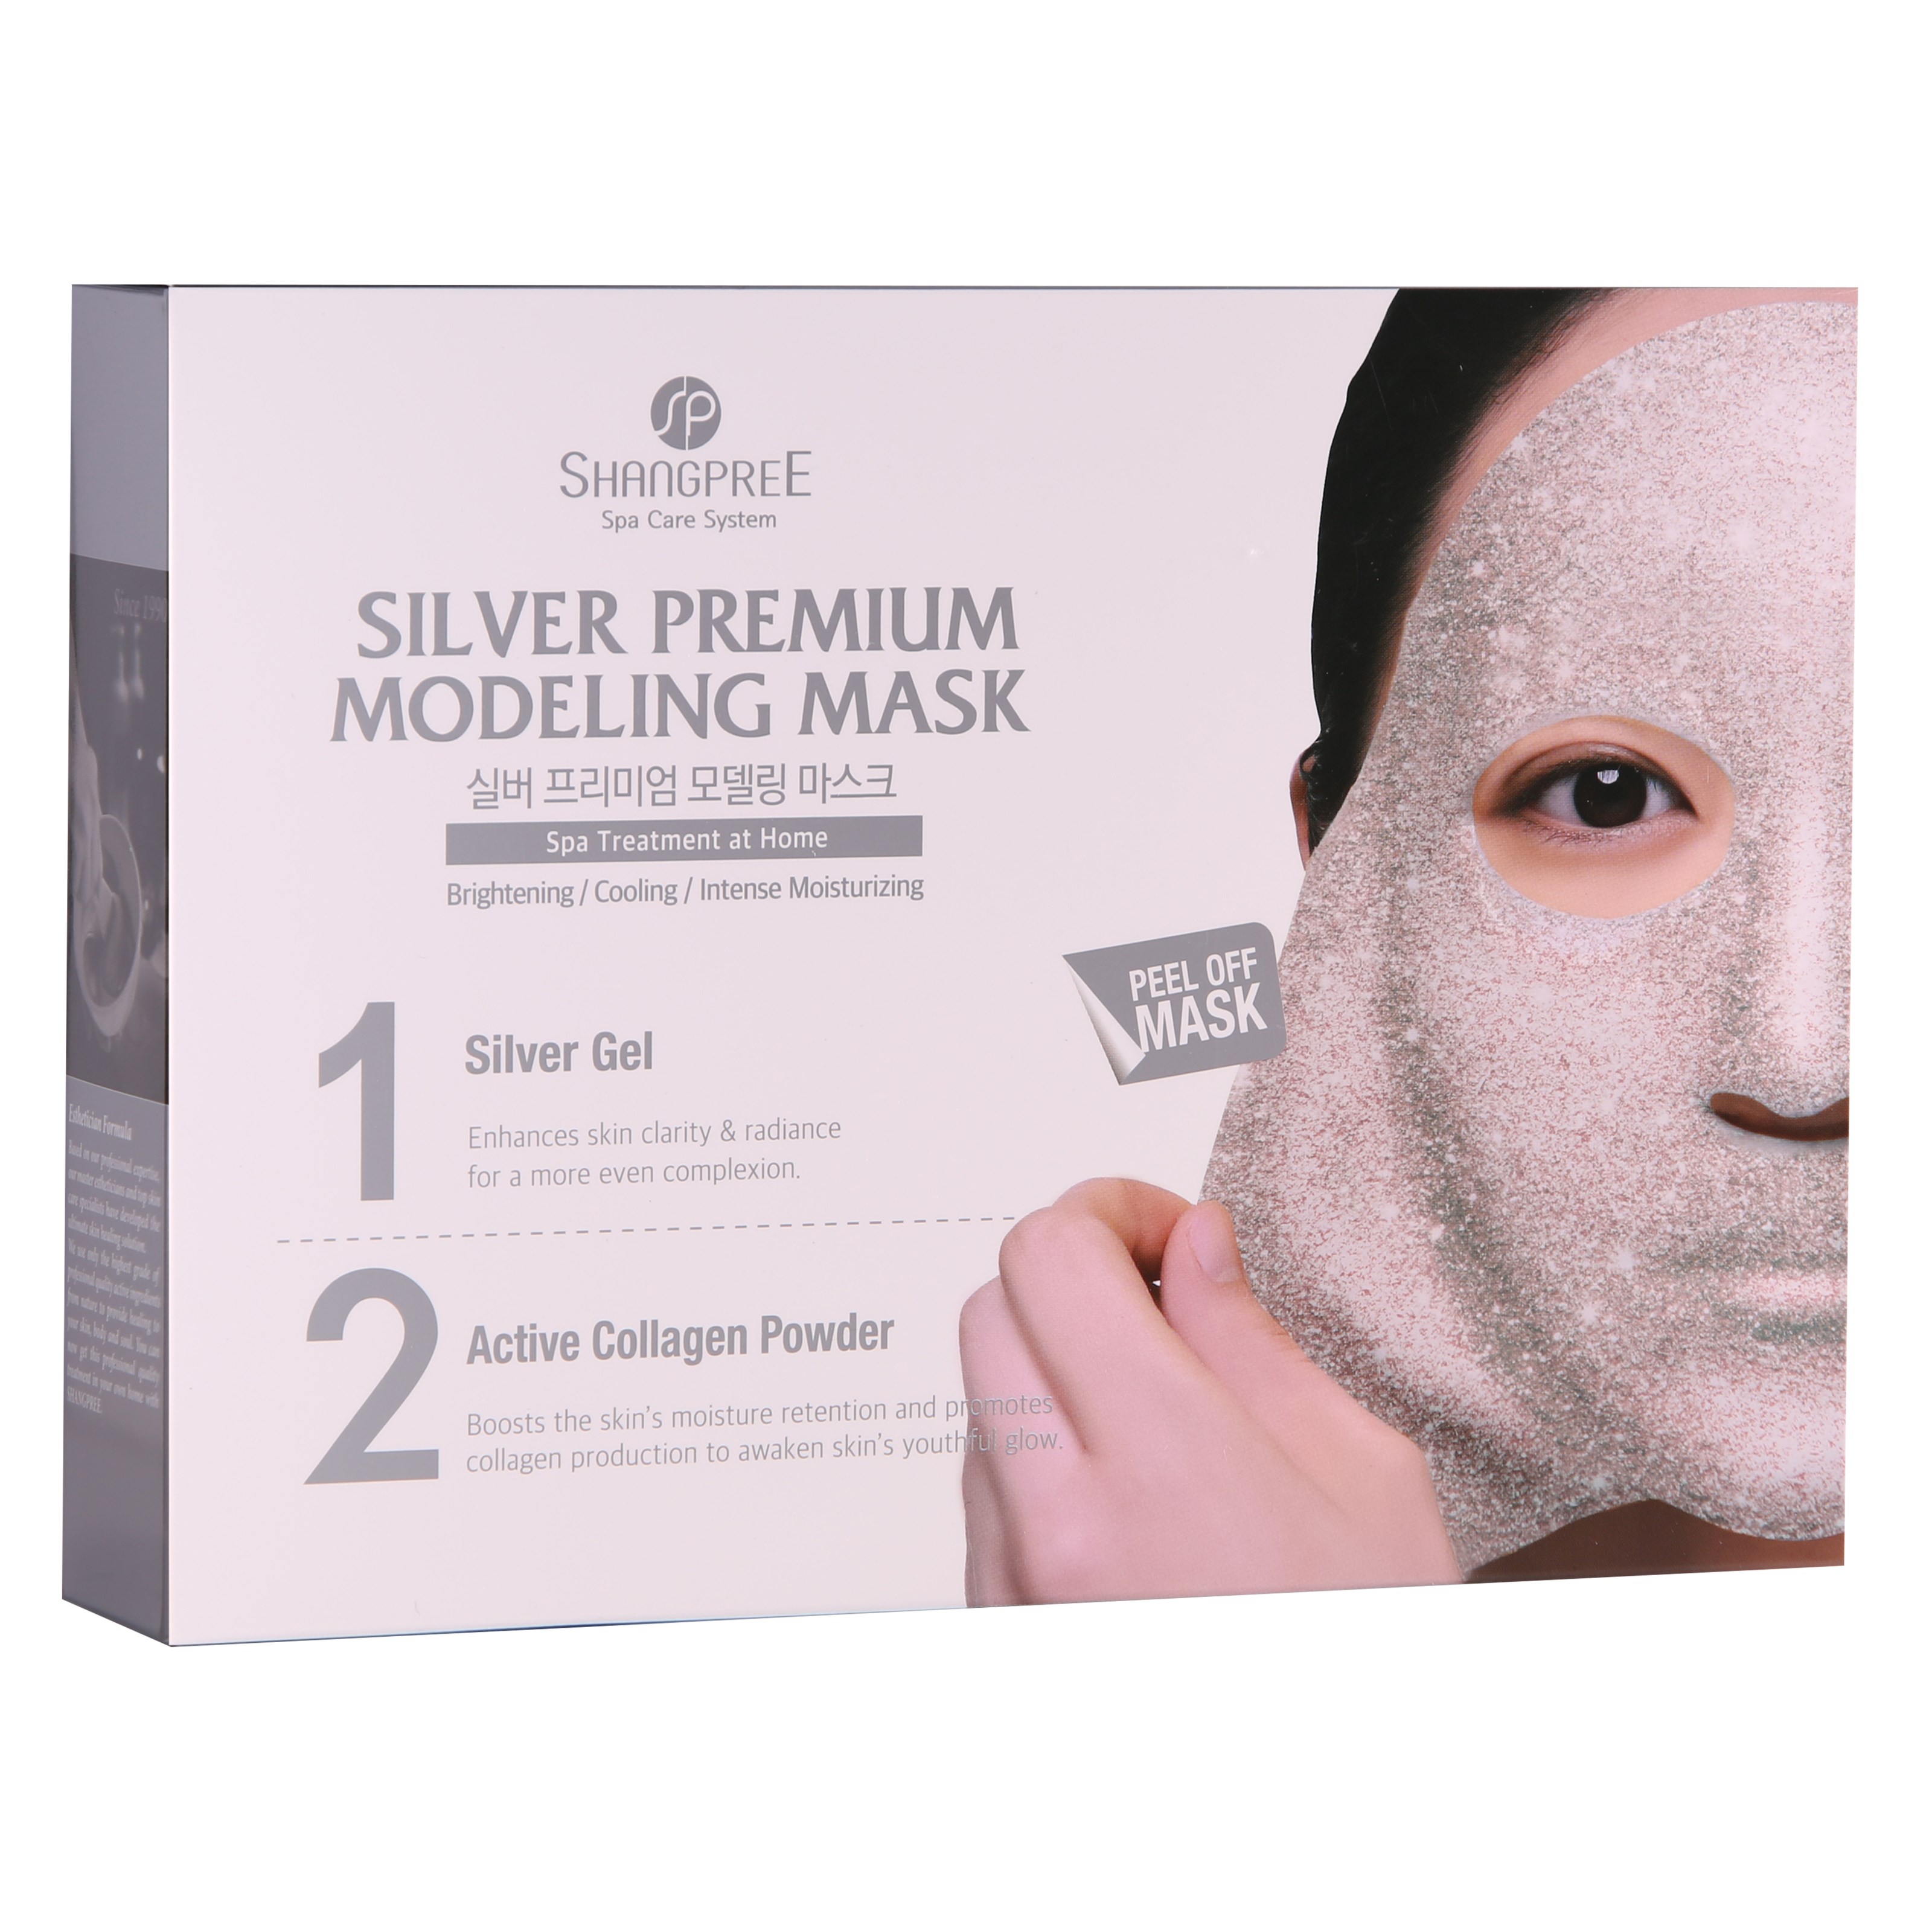 Läs mer om Shangpree Premium Modeling Mask Premium Modeling Silver Mask